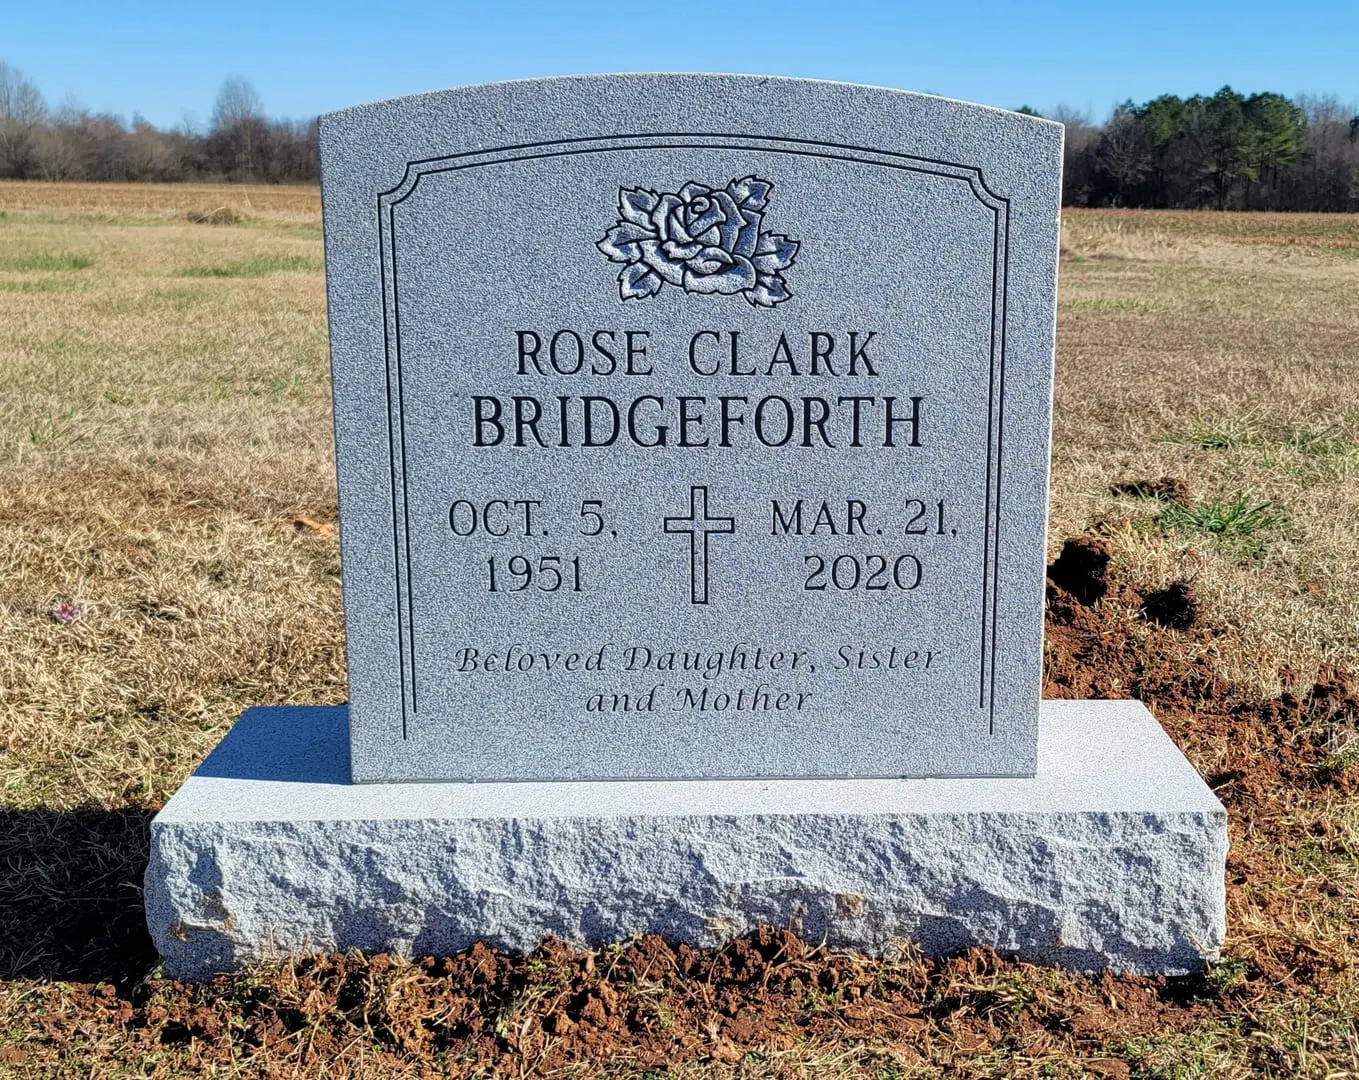 A memorial slab for Rose Clark Bridgeforth